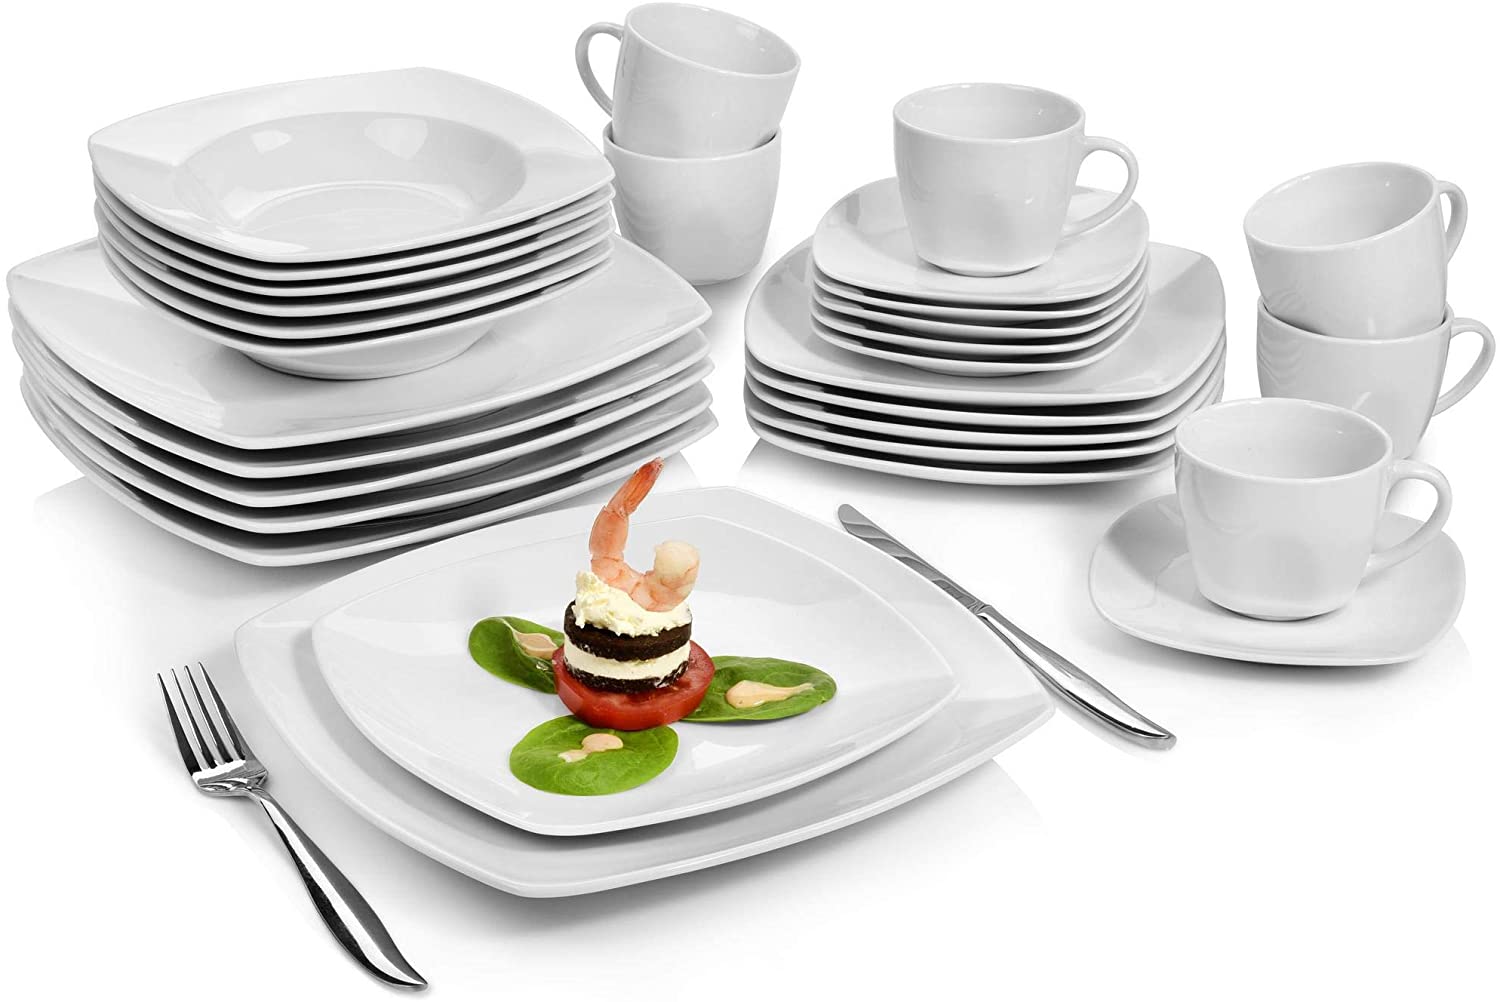 SÄNGER Dinner Service Markant White, 30-Piece Porcelain Crockery Set for 6 People, Square Plate Set, Dinner Plate